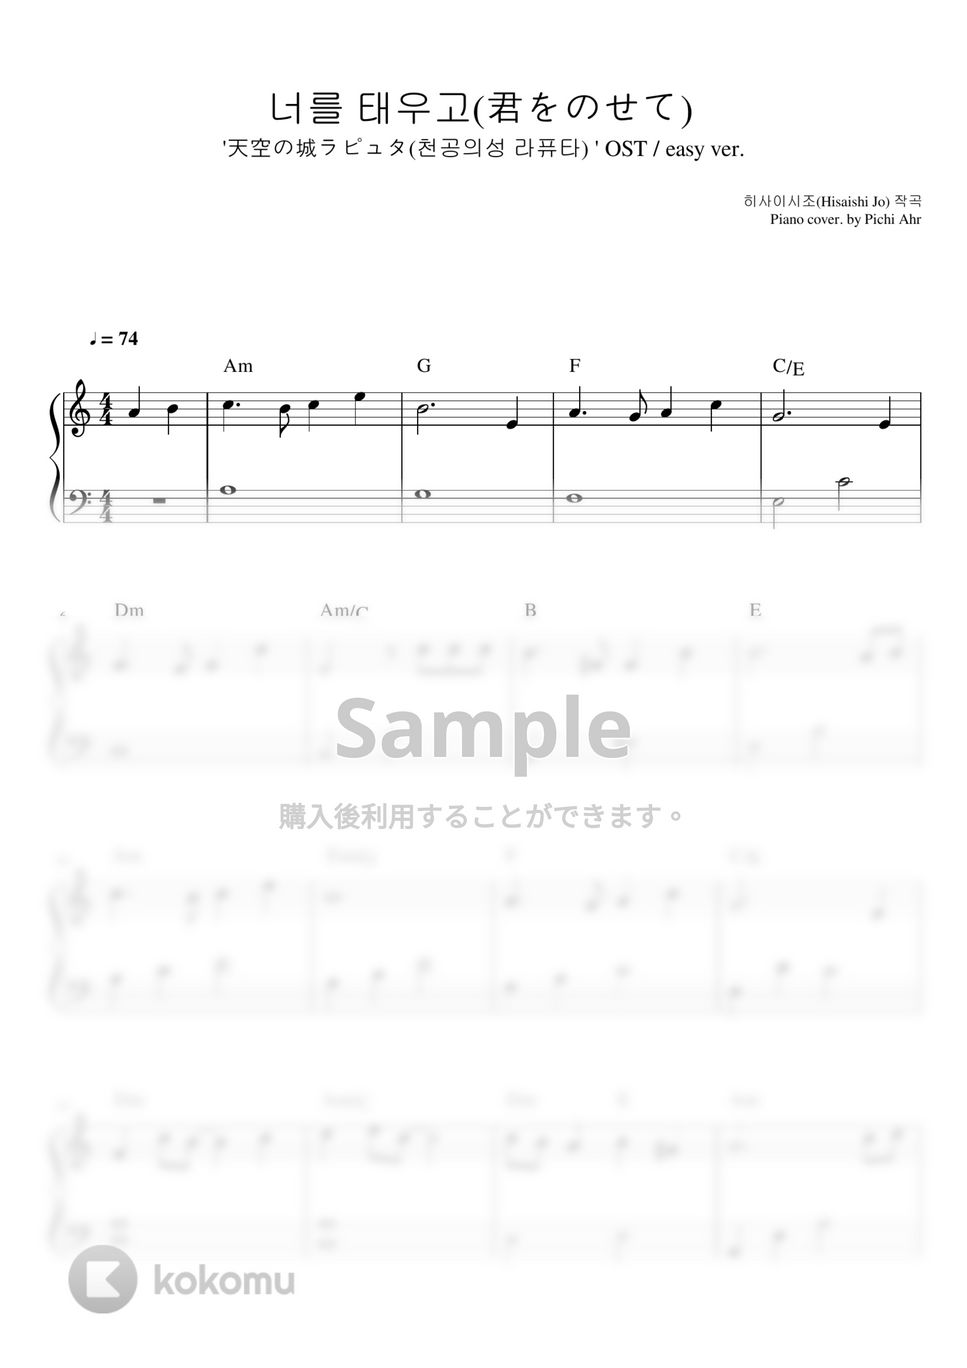 Hisaishi Jo - 君をのせて (easy ver. C key) by Pichi Ahr